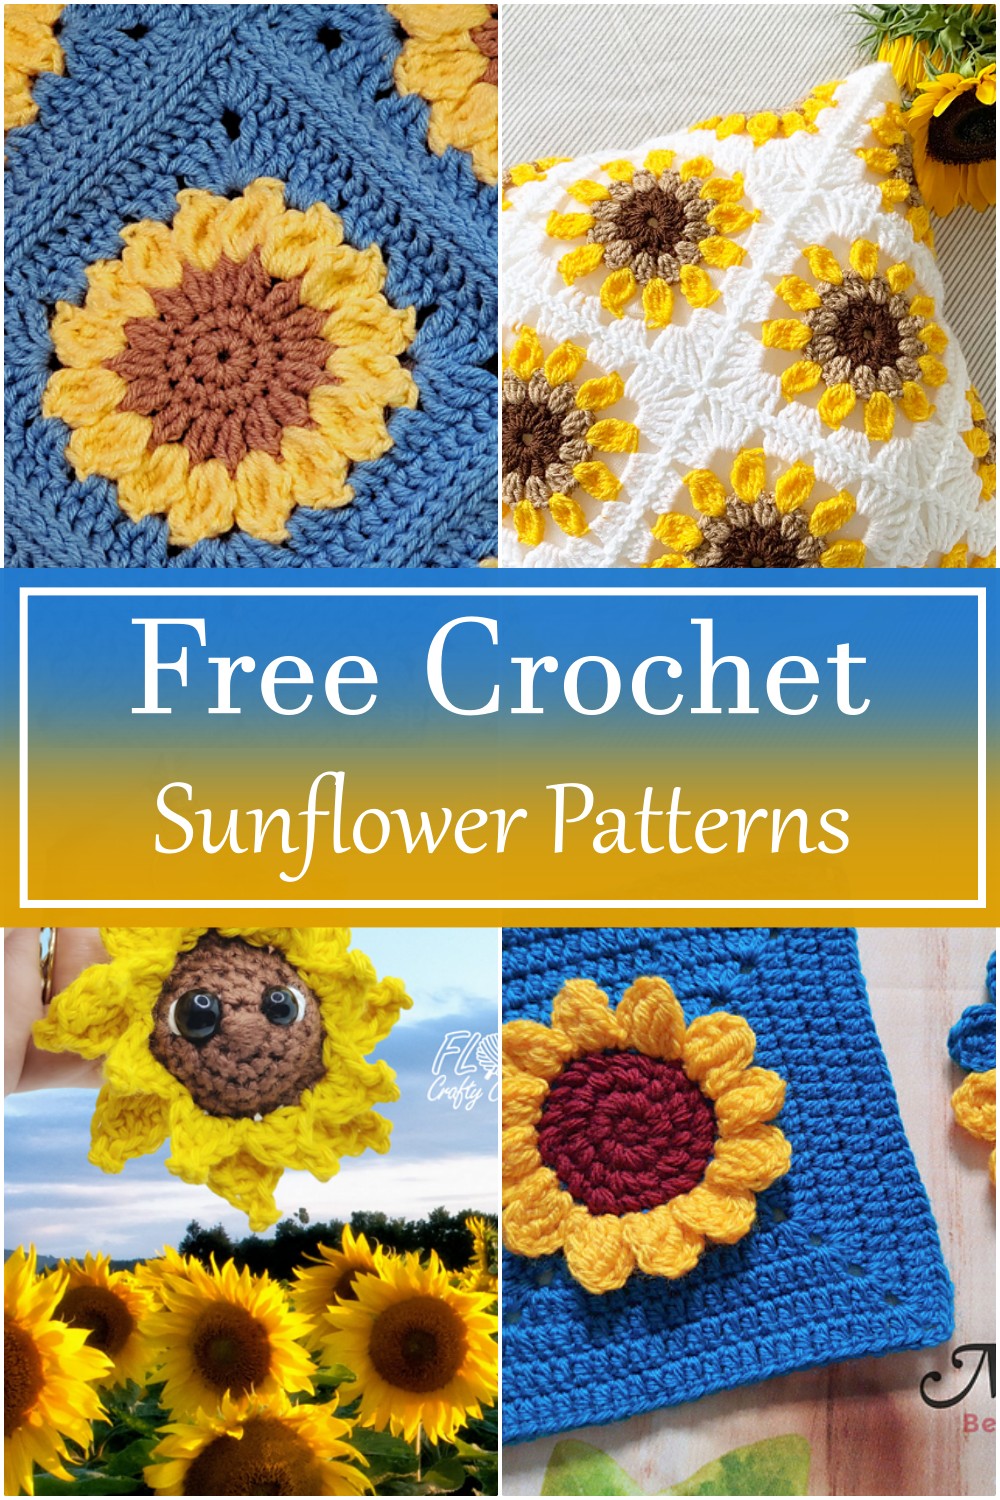 10 Free Crochet Sunflower Patterns